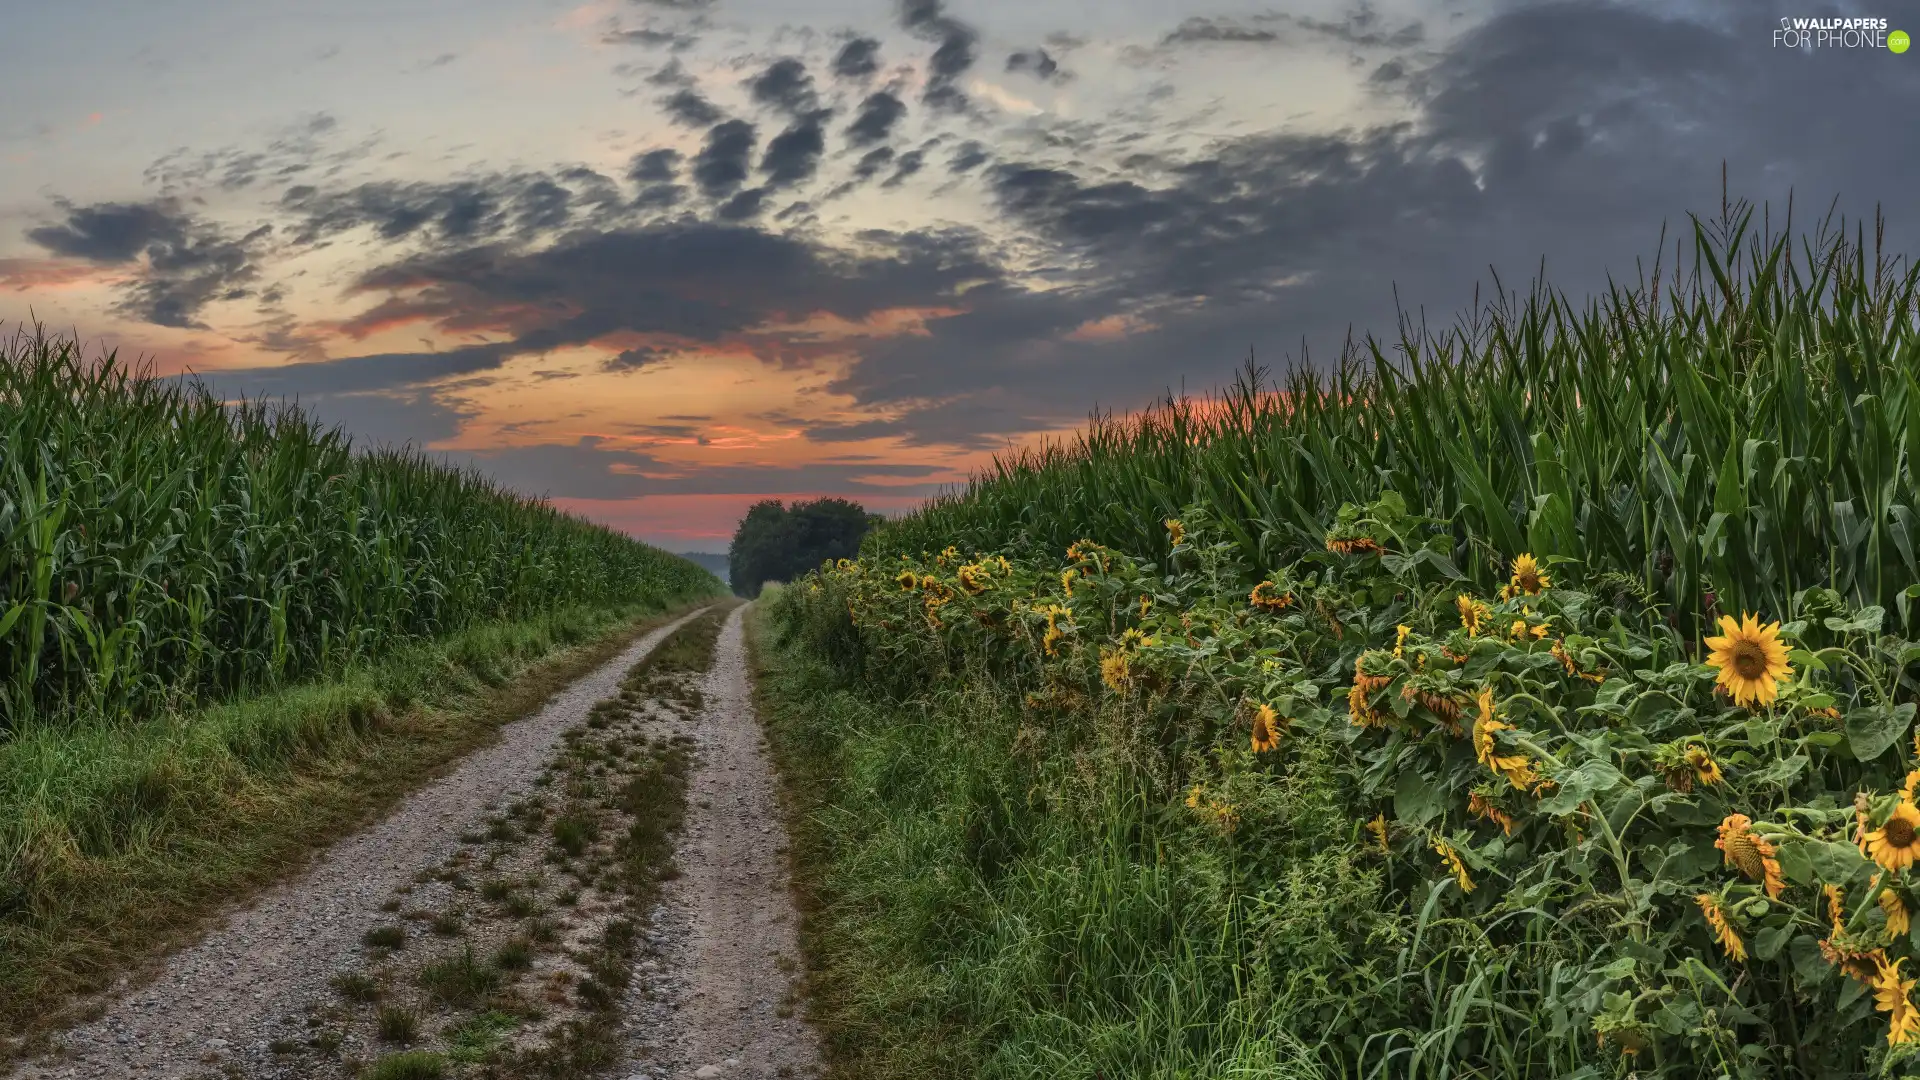 Nice sunflowers, Way, clouds, Field, Field, corn, Great Sunsets